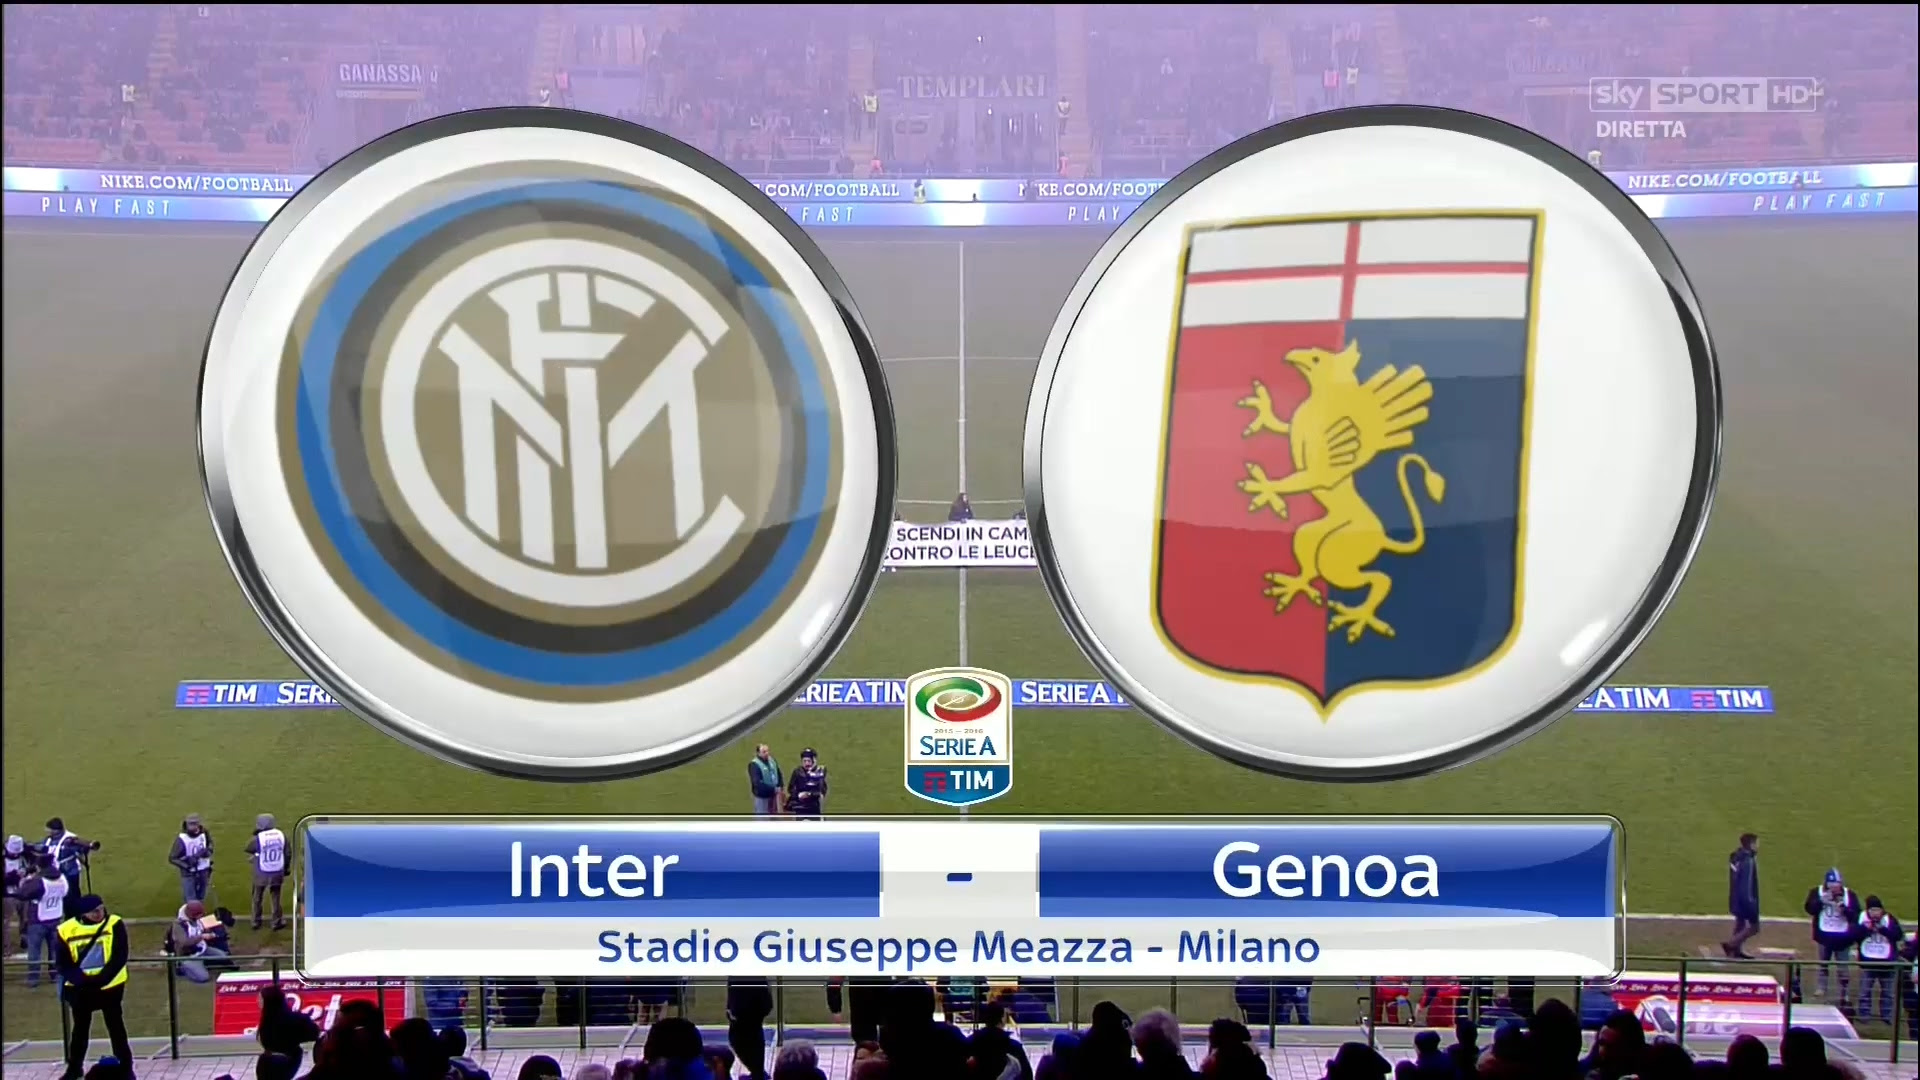 League leaders inter welcomes genoa to the san siro in milan. Futbol Serie A 16 17 Inter Milan Vs Genoa 11 12 2016